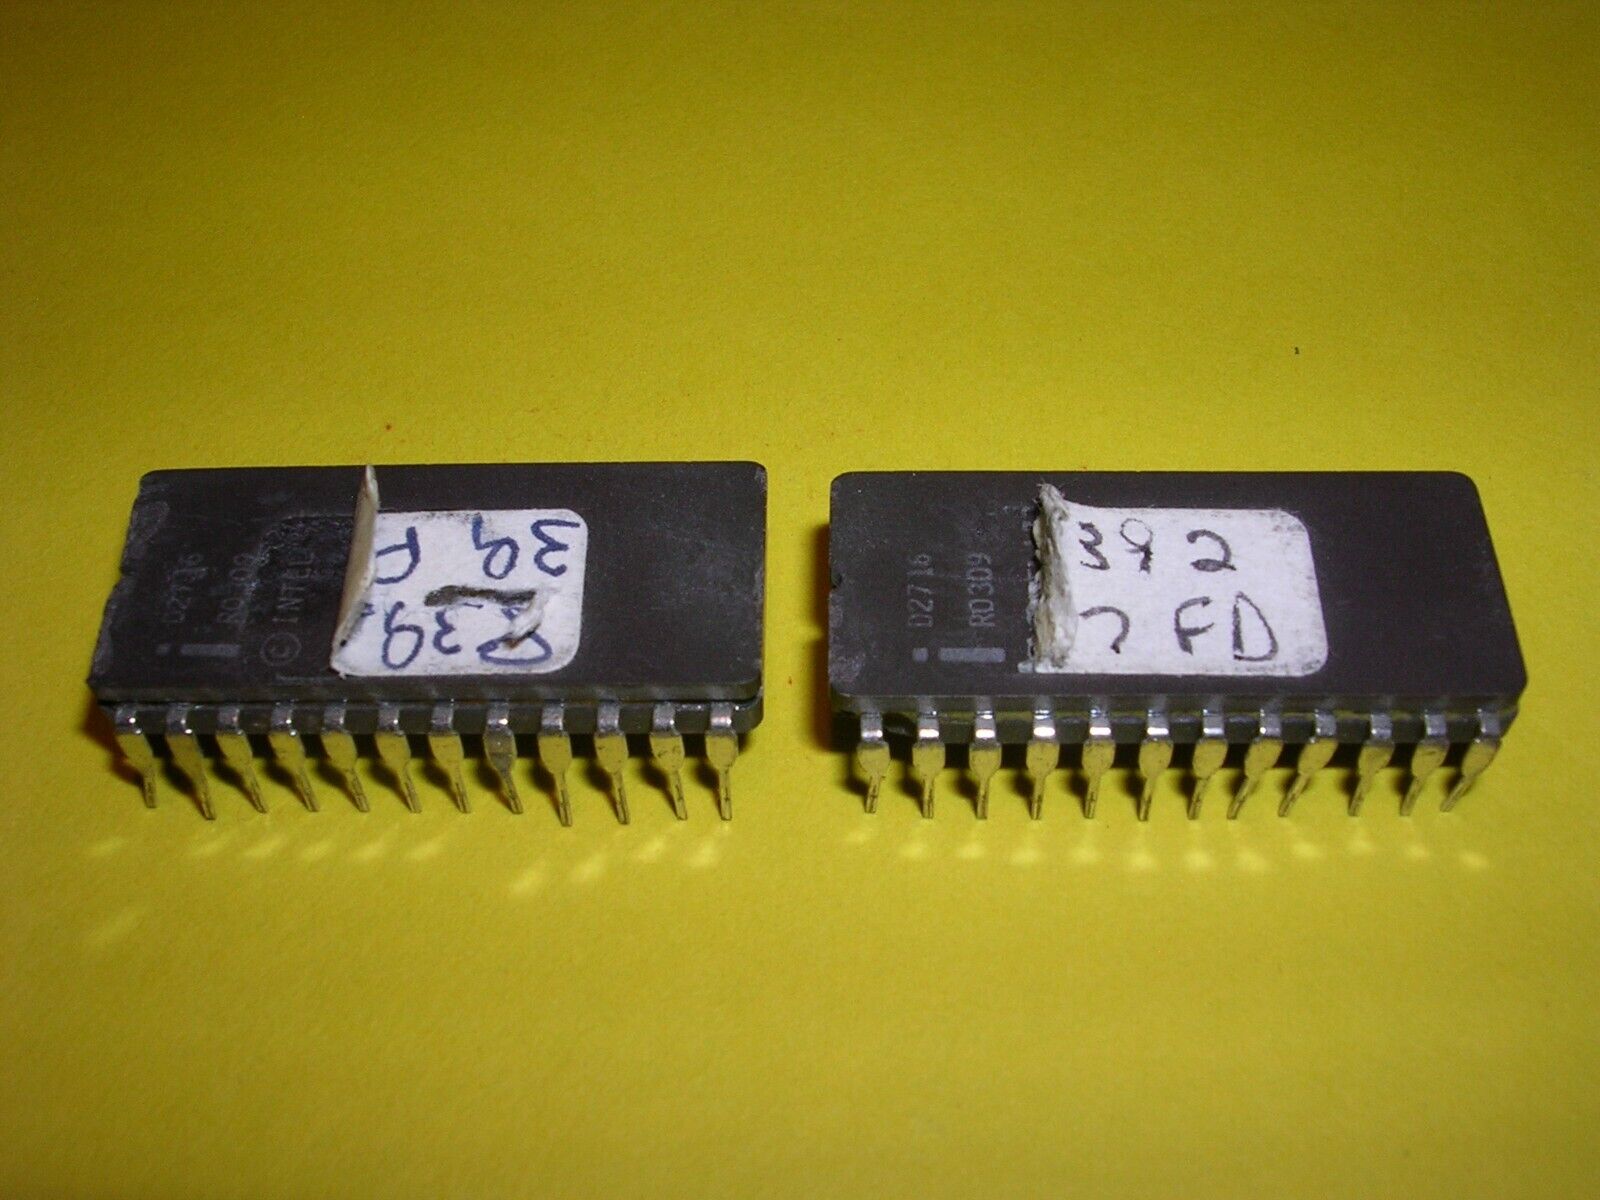 Two (2) Intel D2716 (2716, C2716) 16K-Bit (2048 x 8) EPROM Chips